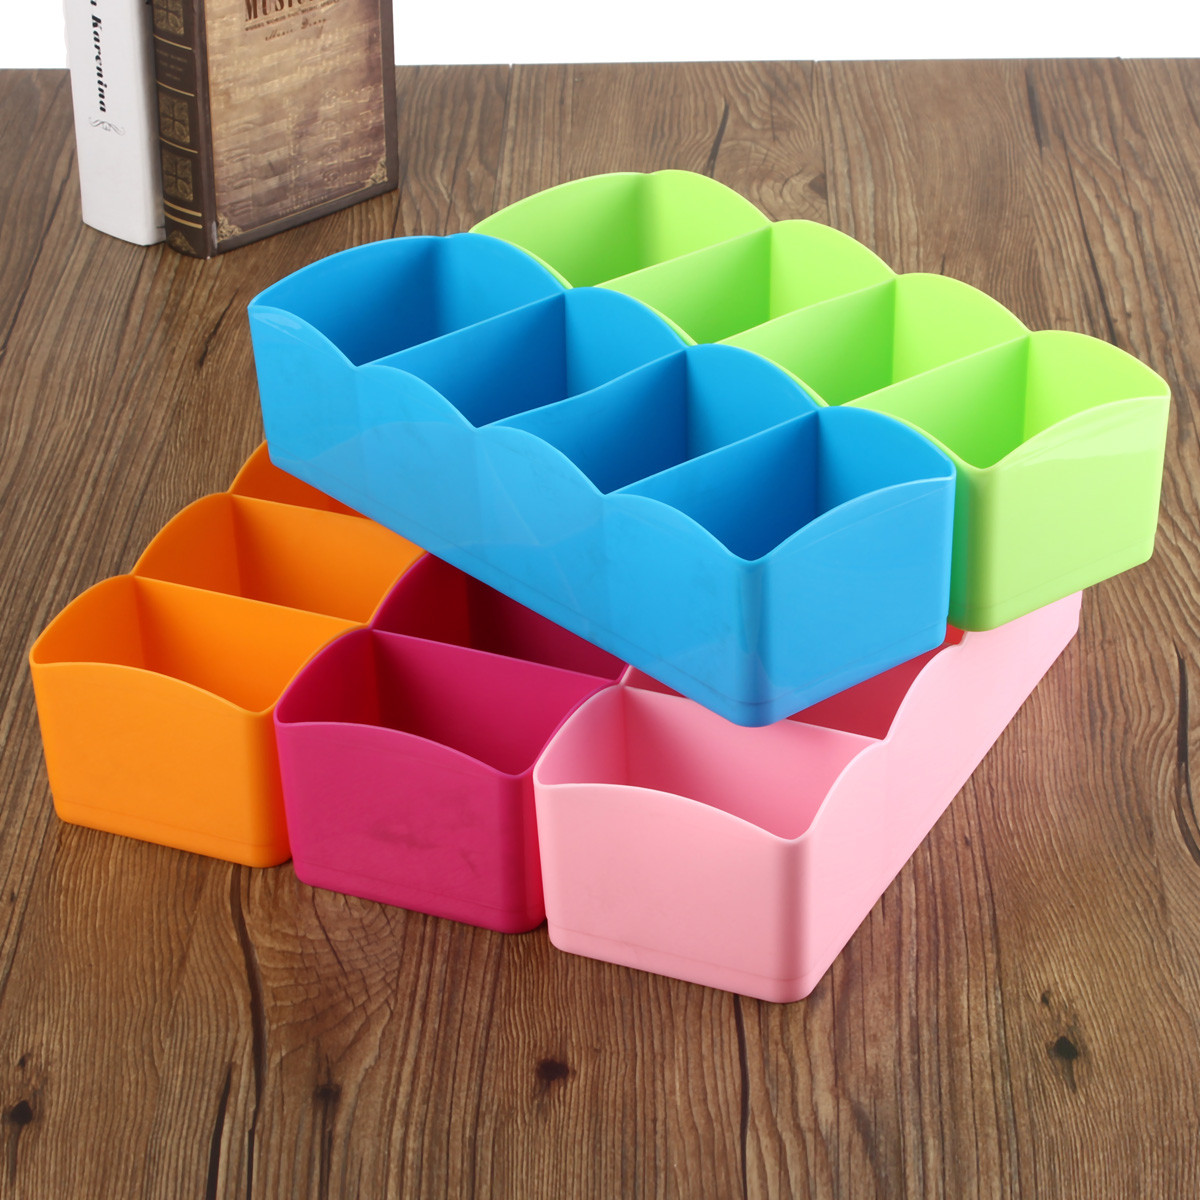 Best ideas about DIY Bra Organizer
. Save or Pin DIY Plastic Drawer Organizer Storage Divider Box For Tie Now.